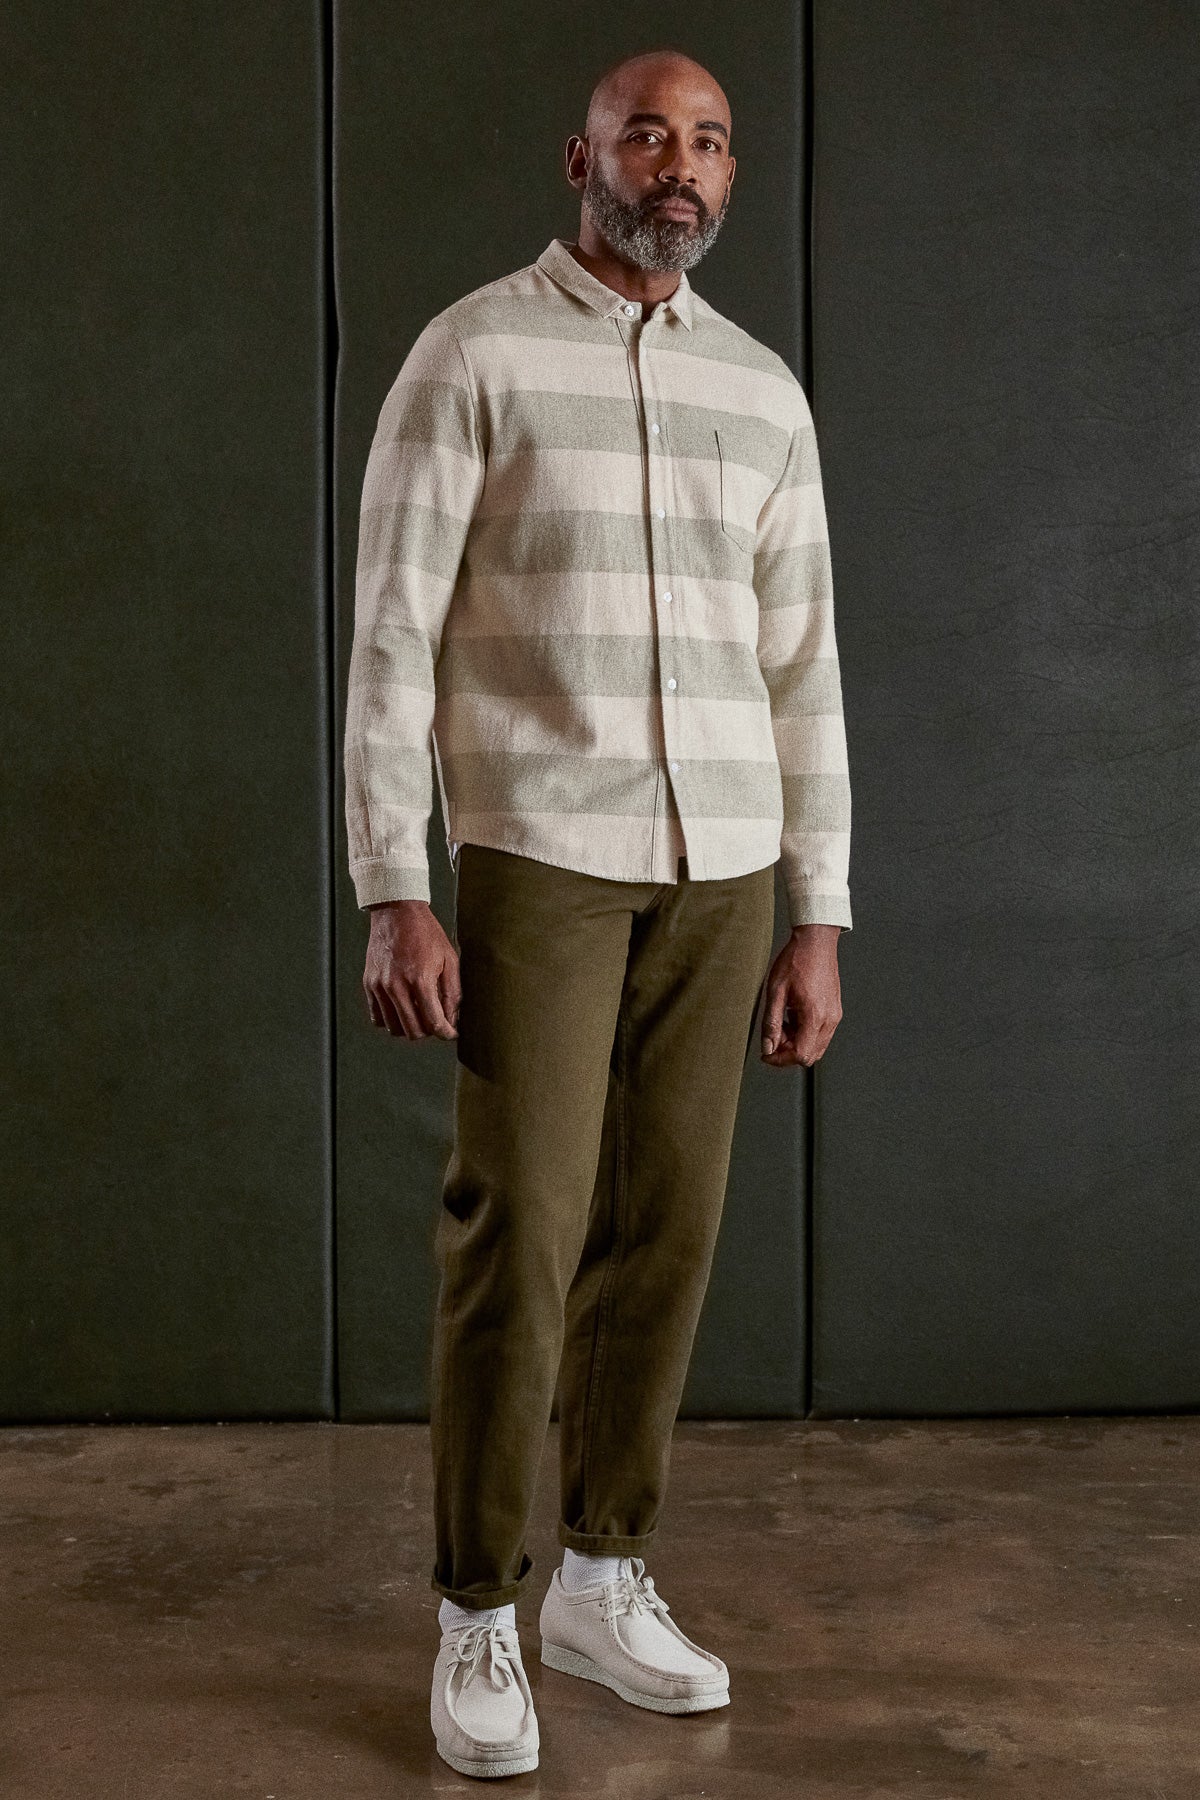 SIMON shirt eco flannel striped khaki